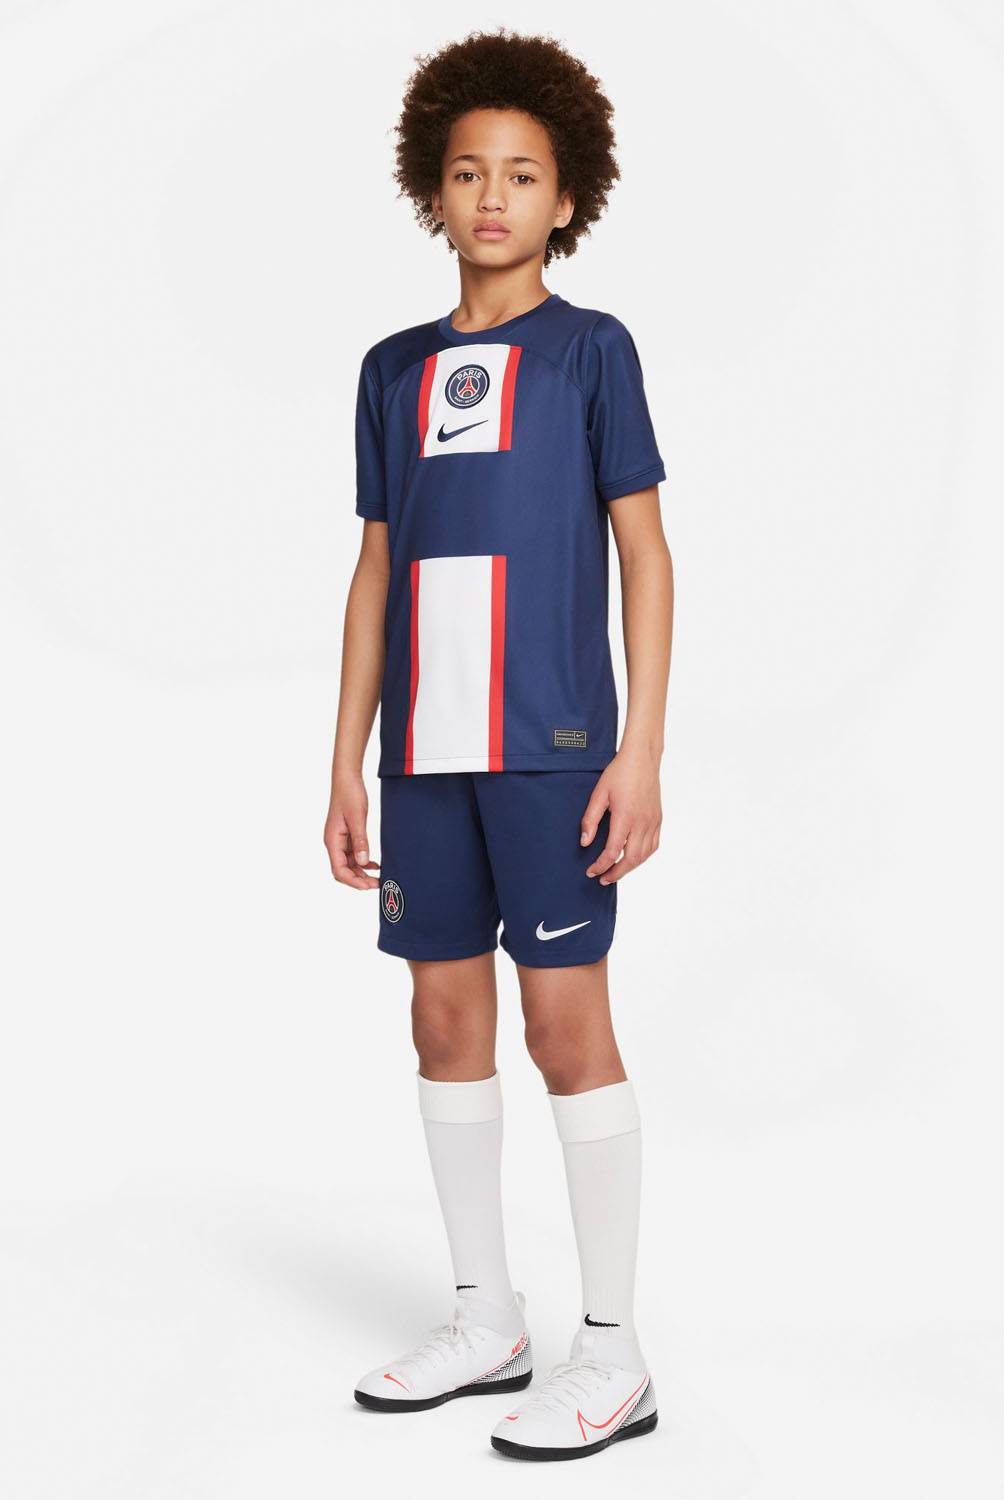 uniforme fútbol niño